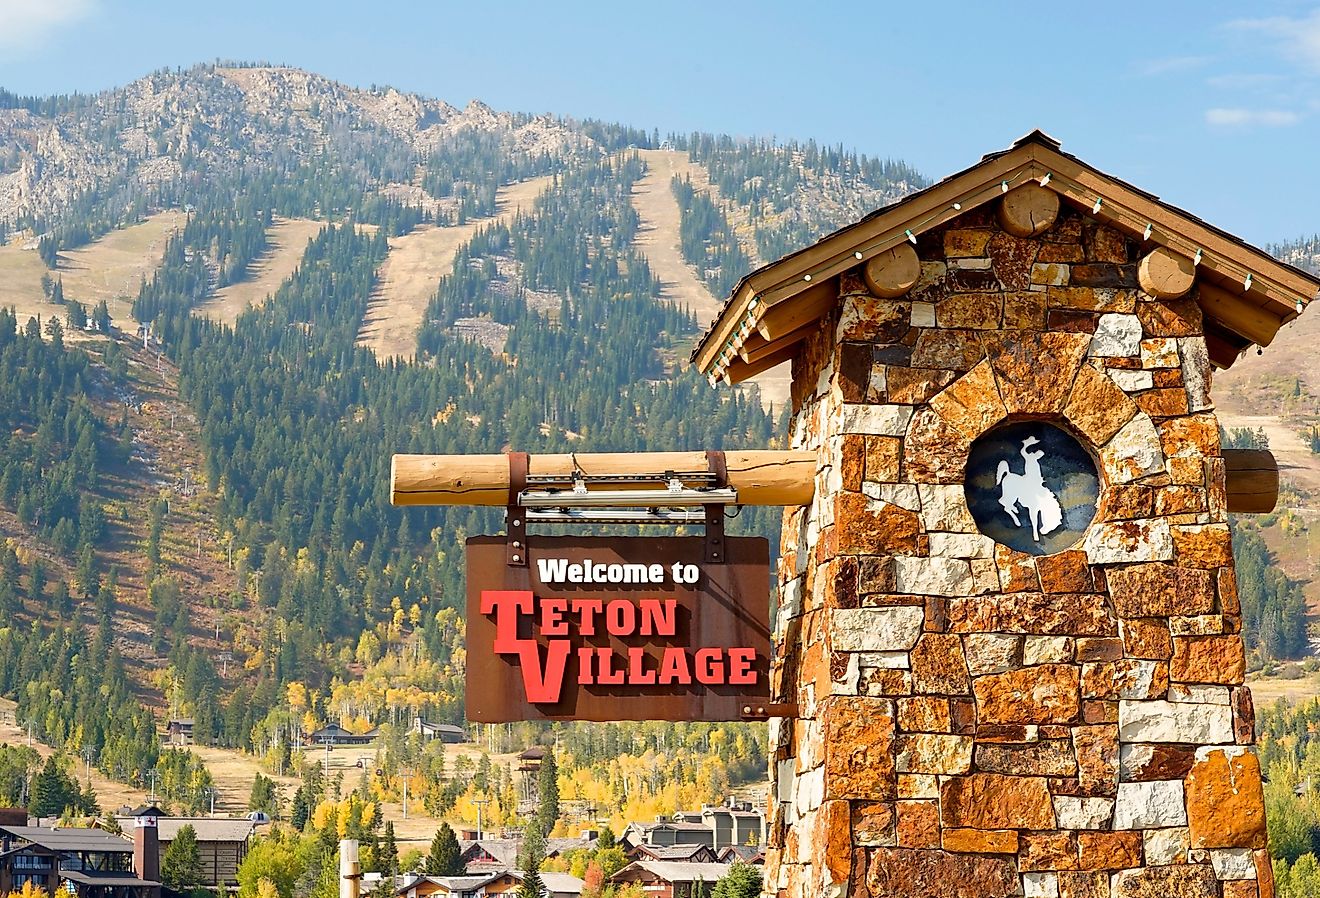 The colorful region around Teton Village in Jackson Hole. Image credit George Wirt via Shutterstock.